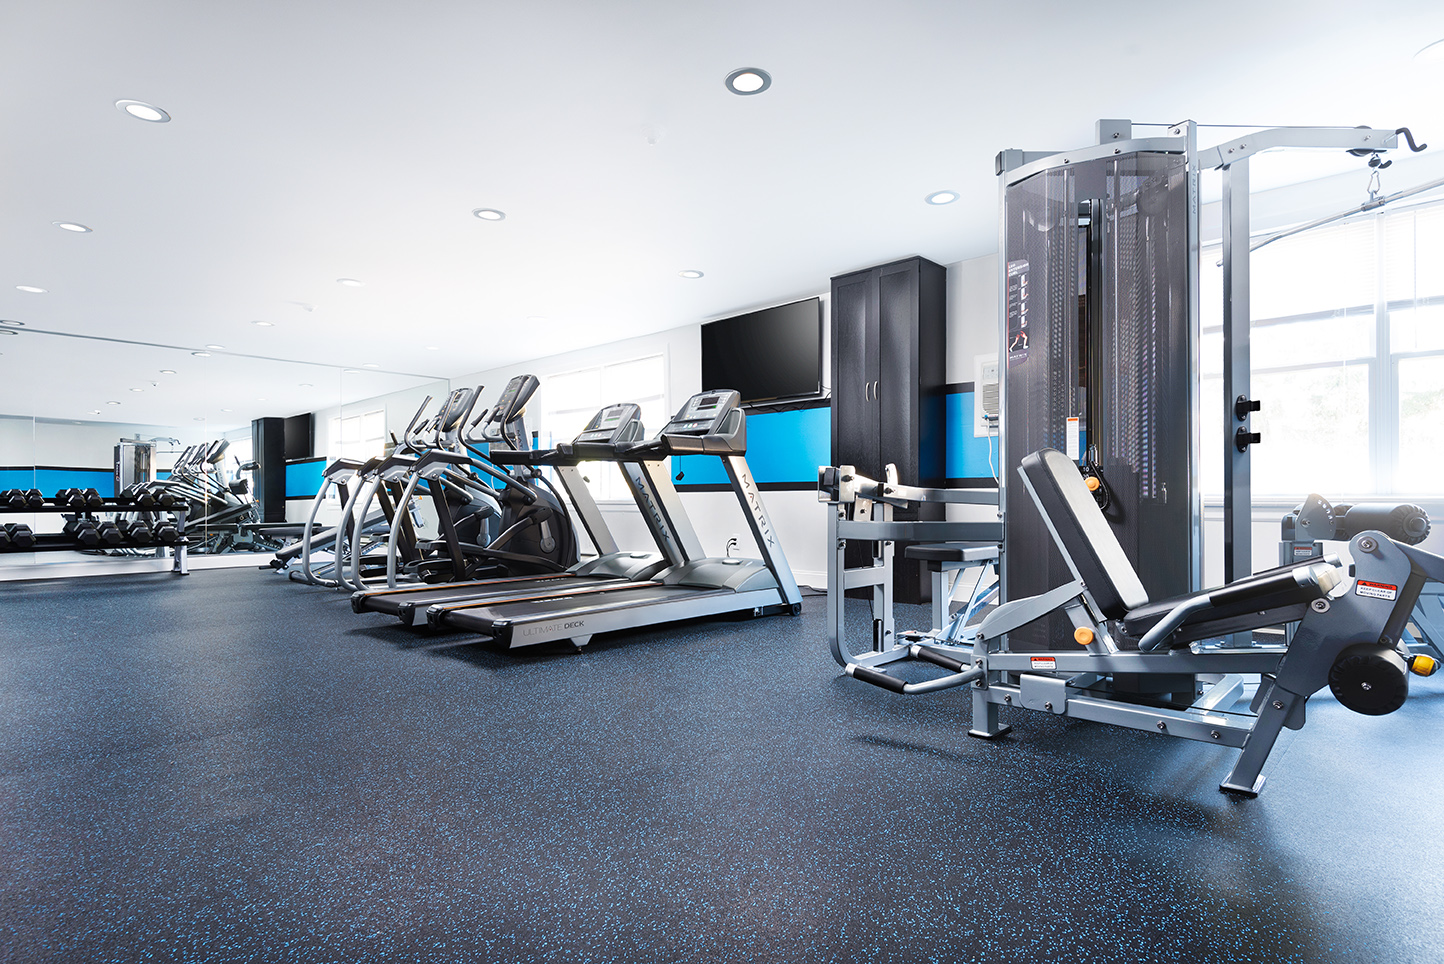 Treadmills at Fitness Center (opens enlargement in new window)